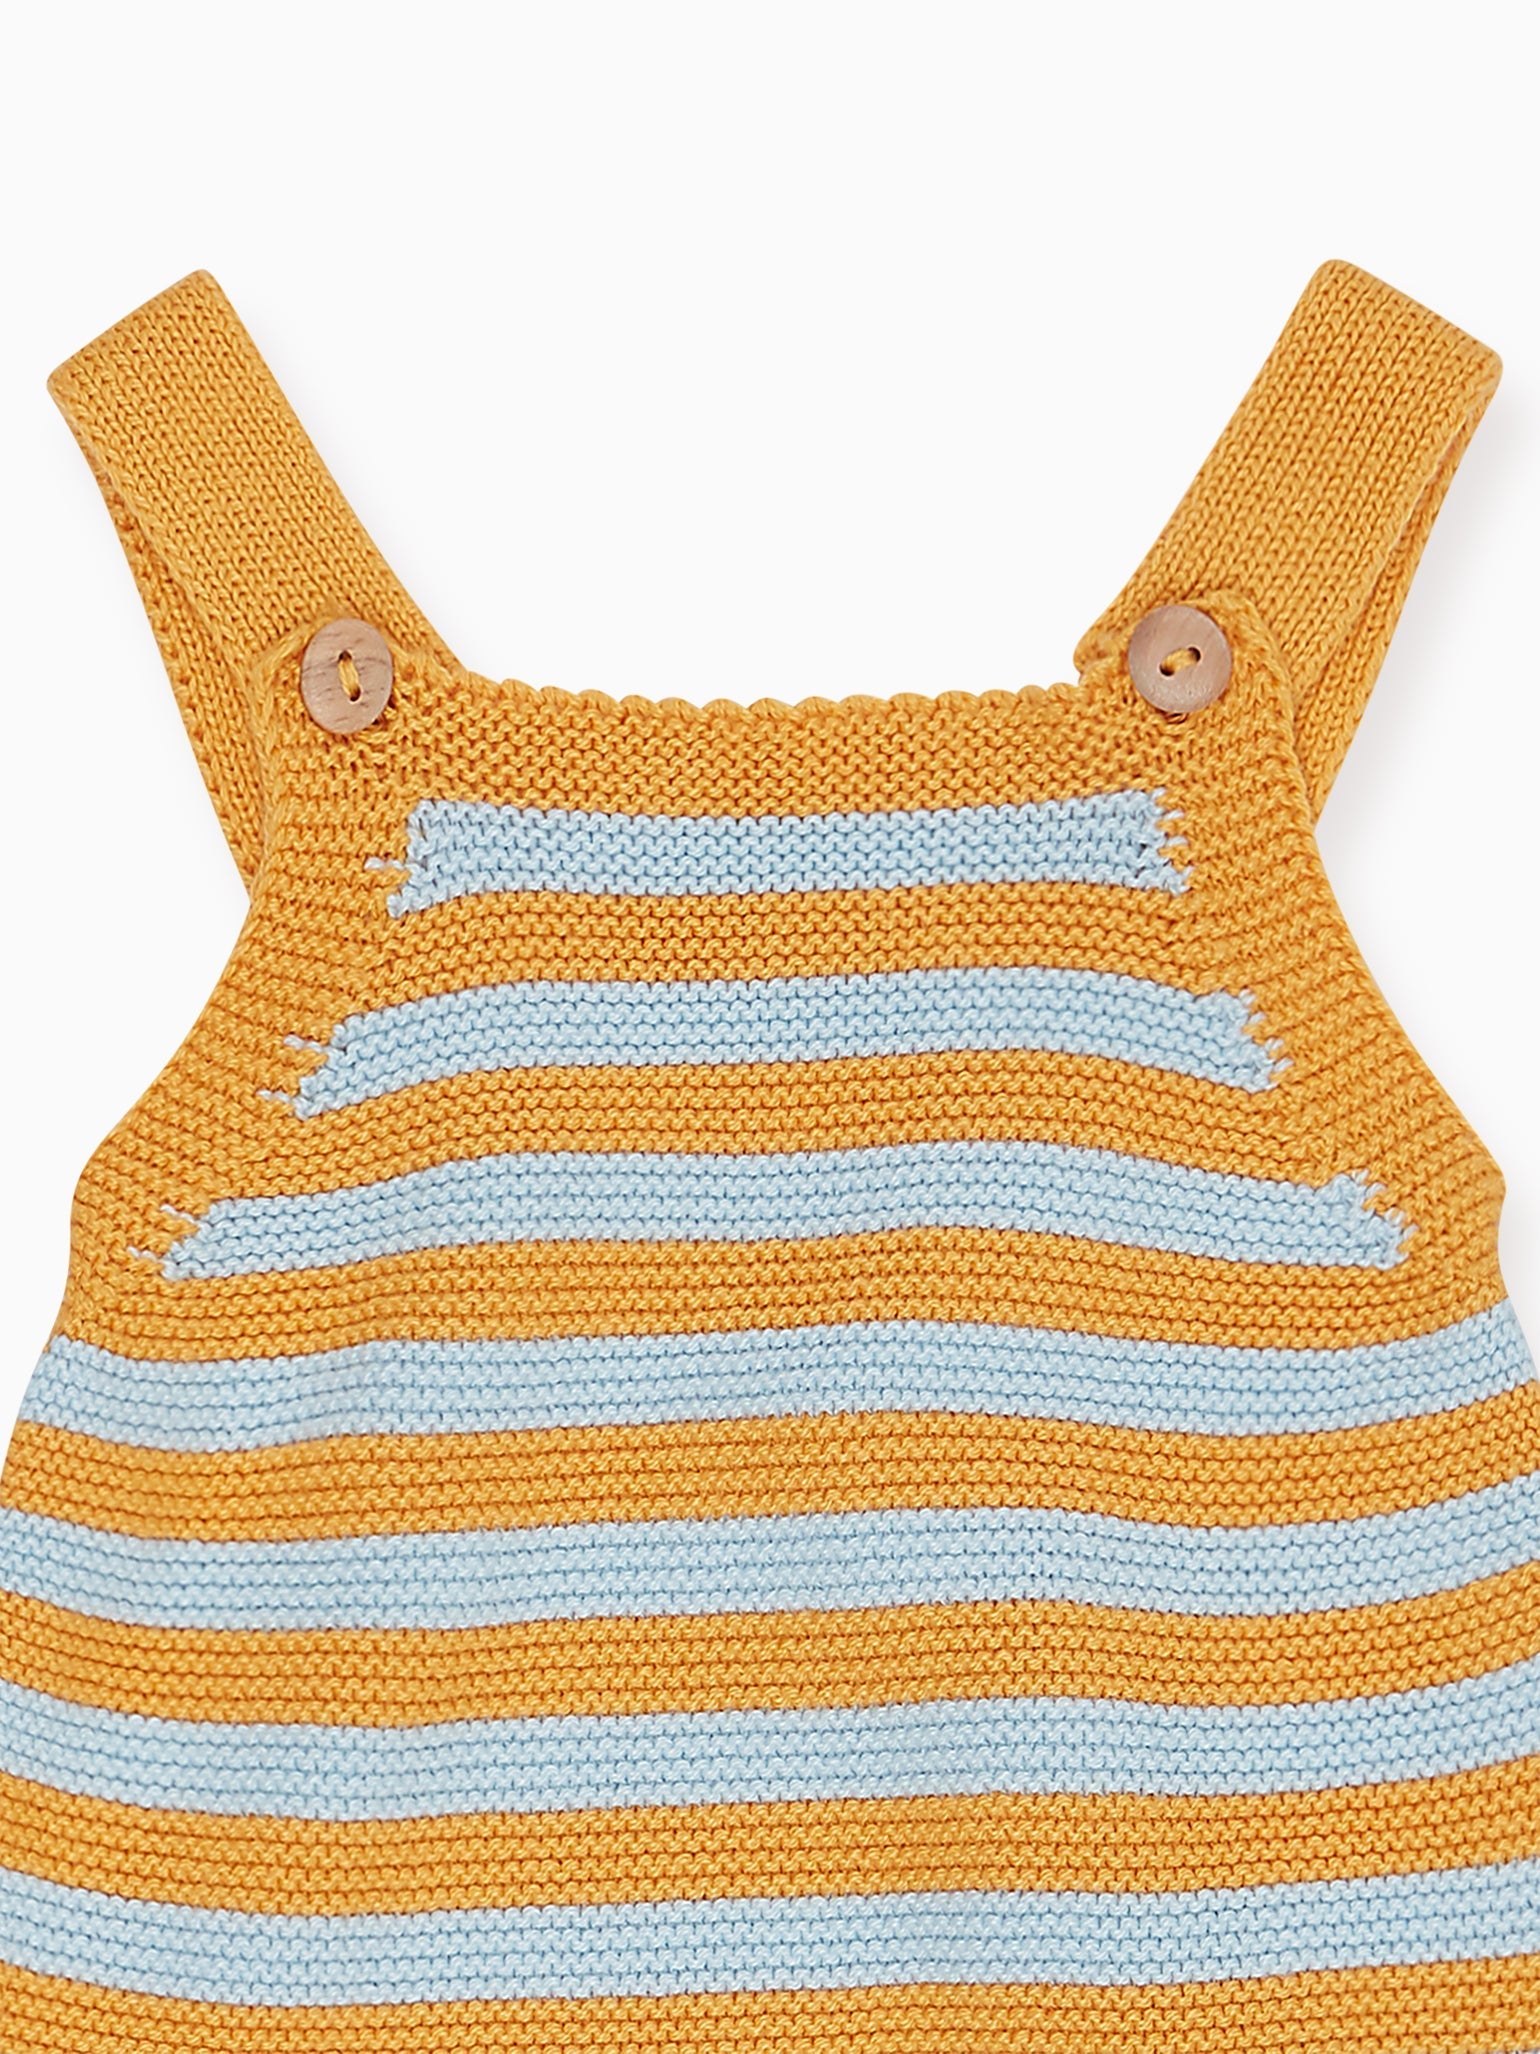 Honey Stripe Ninette Cotton Baby Knitted Overalls